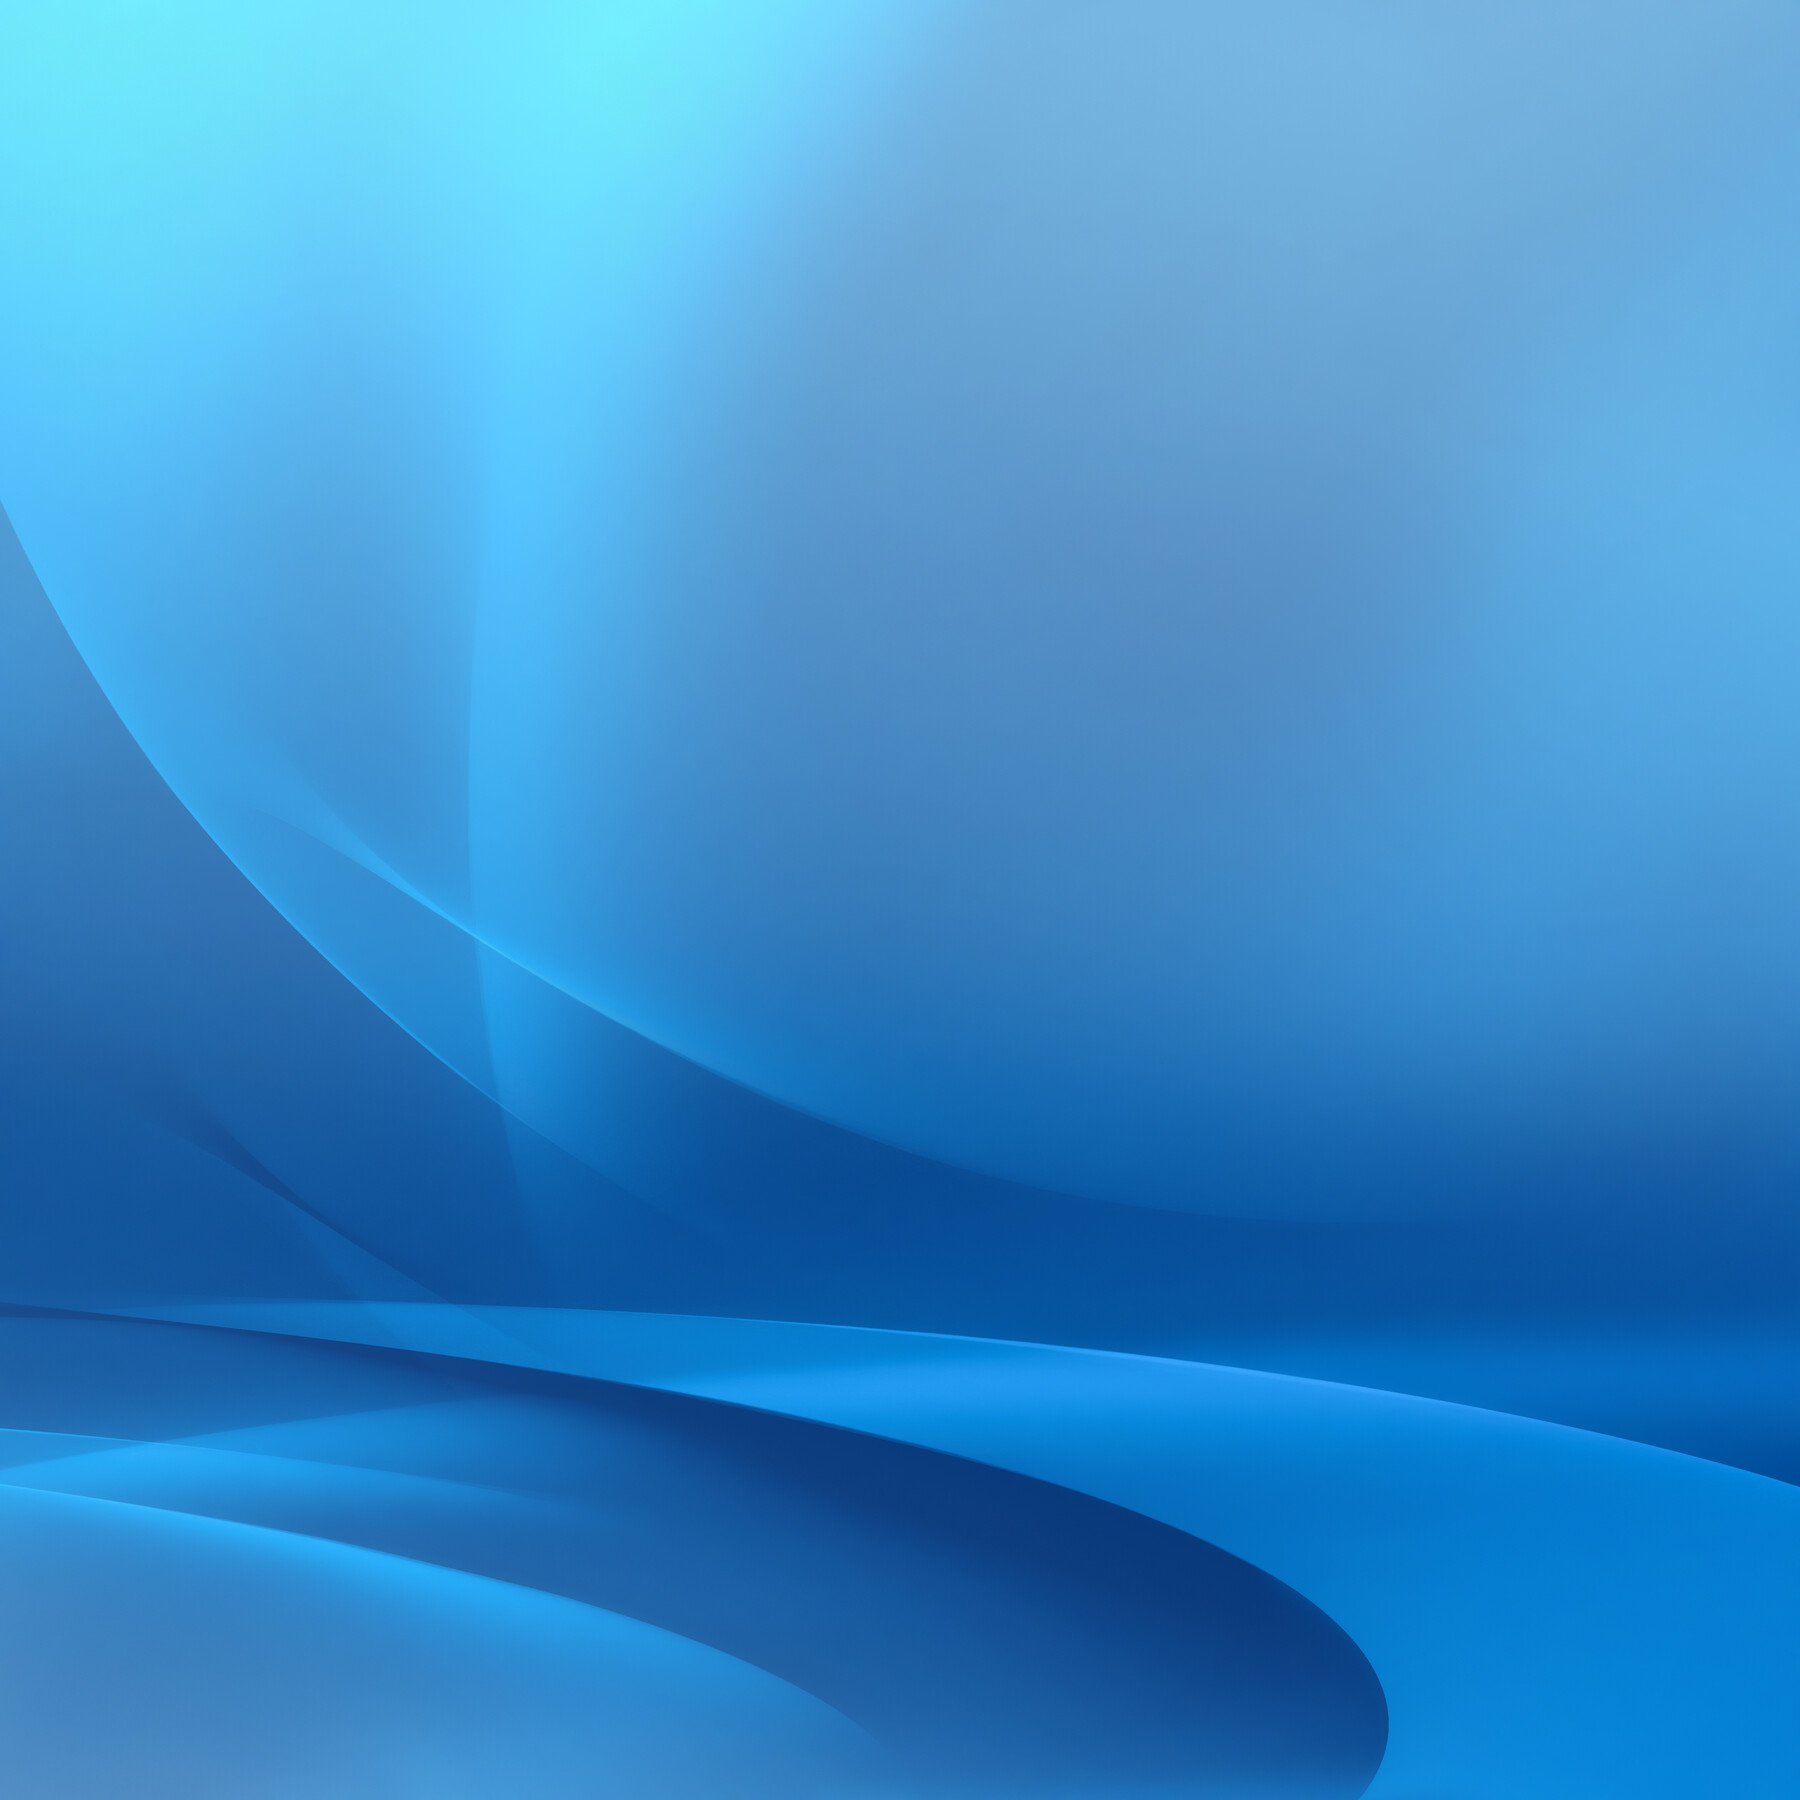 ArtStation - Abstract blue background | Artworks